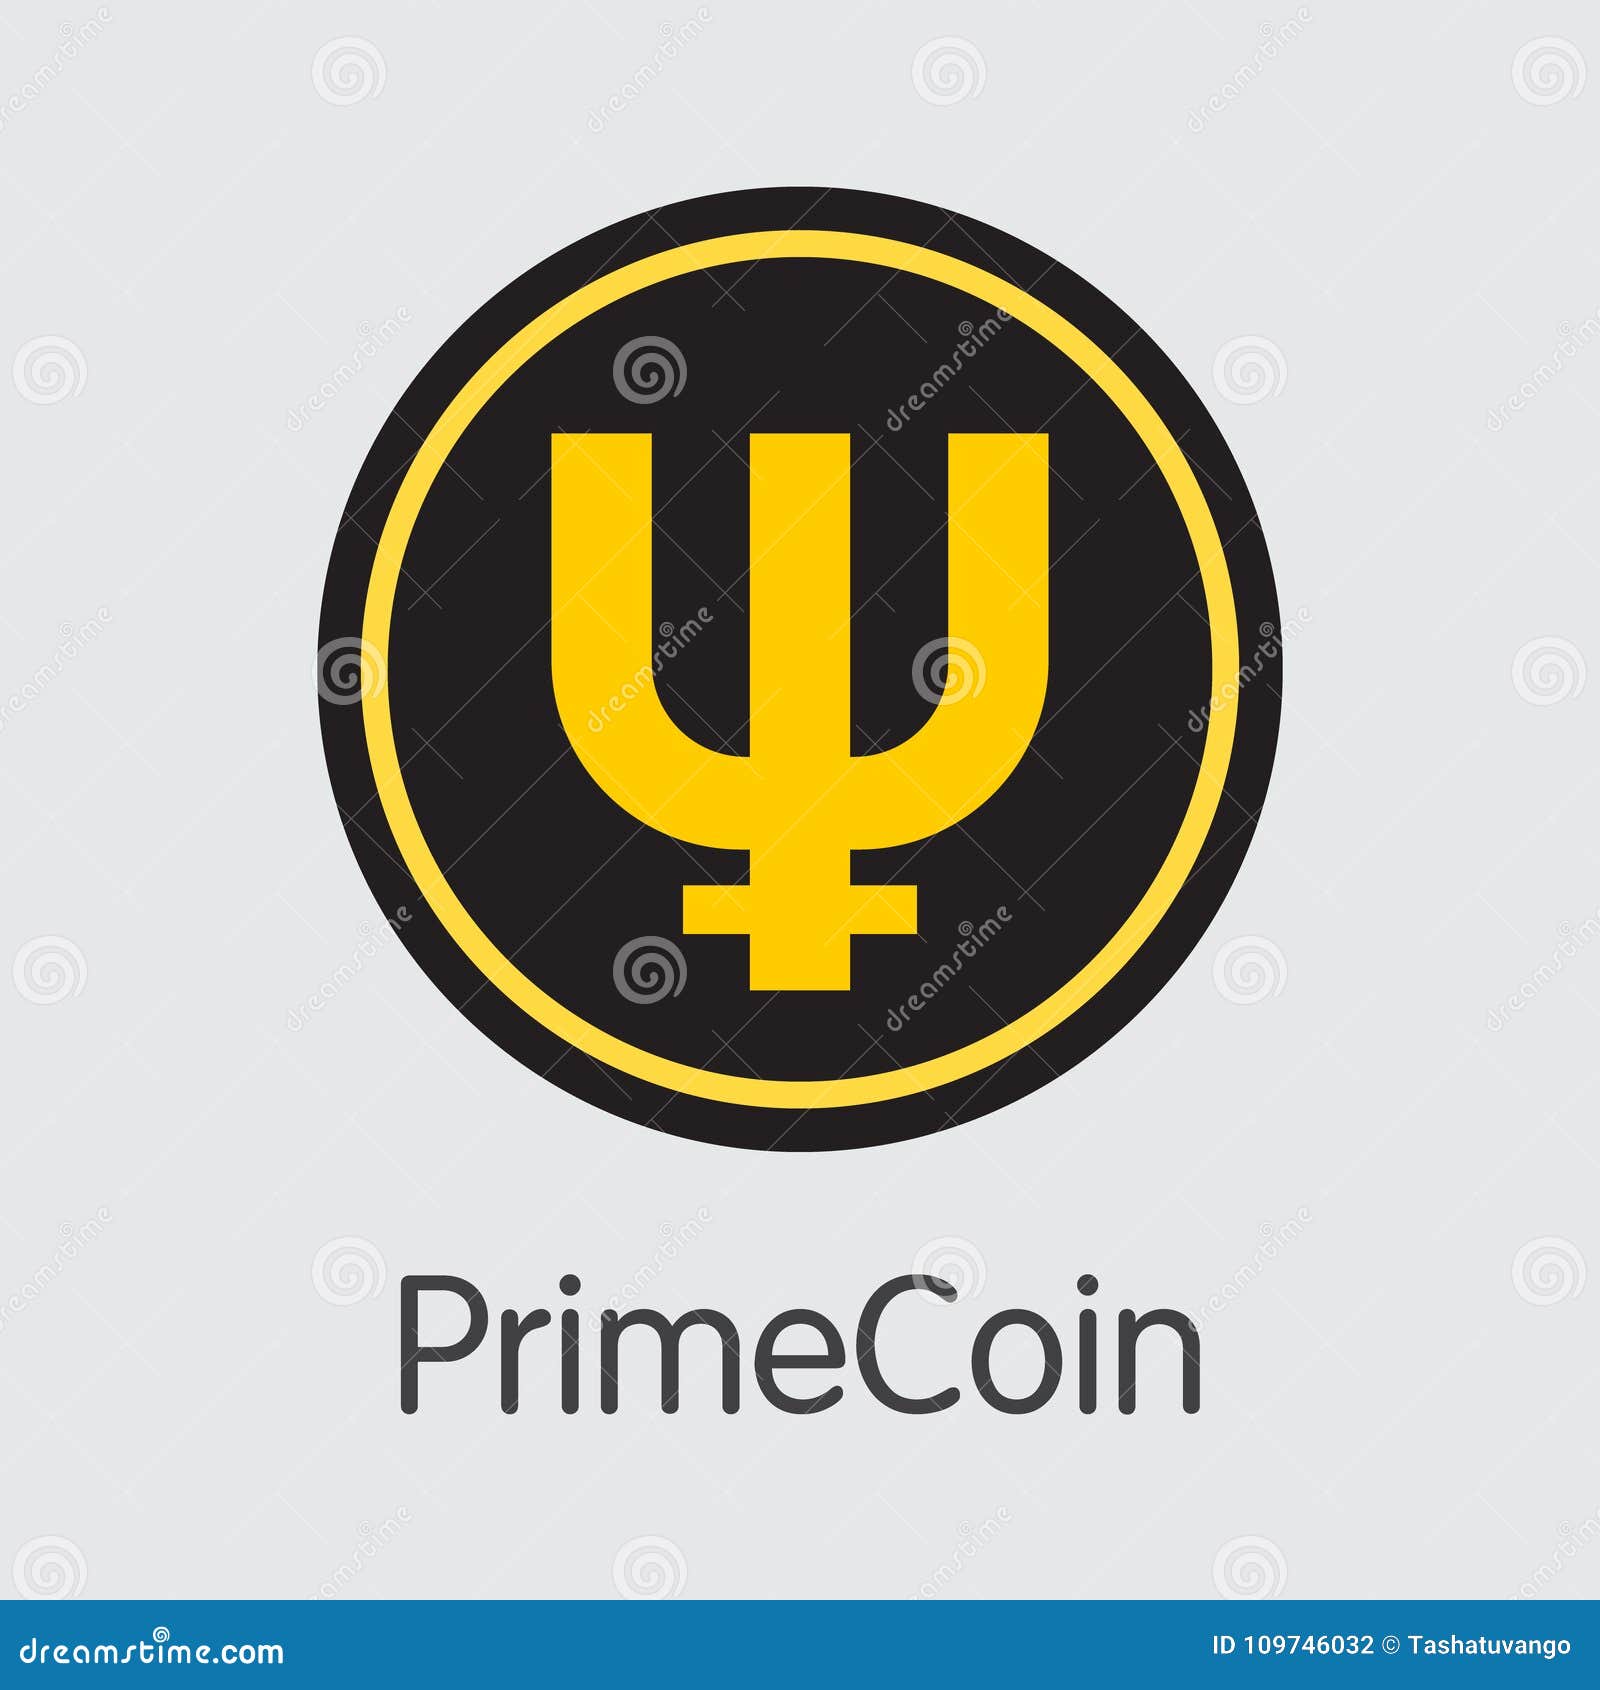 Primecoin Chart